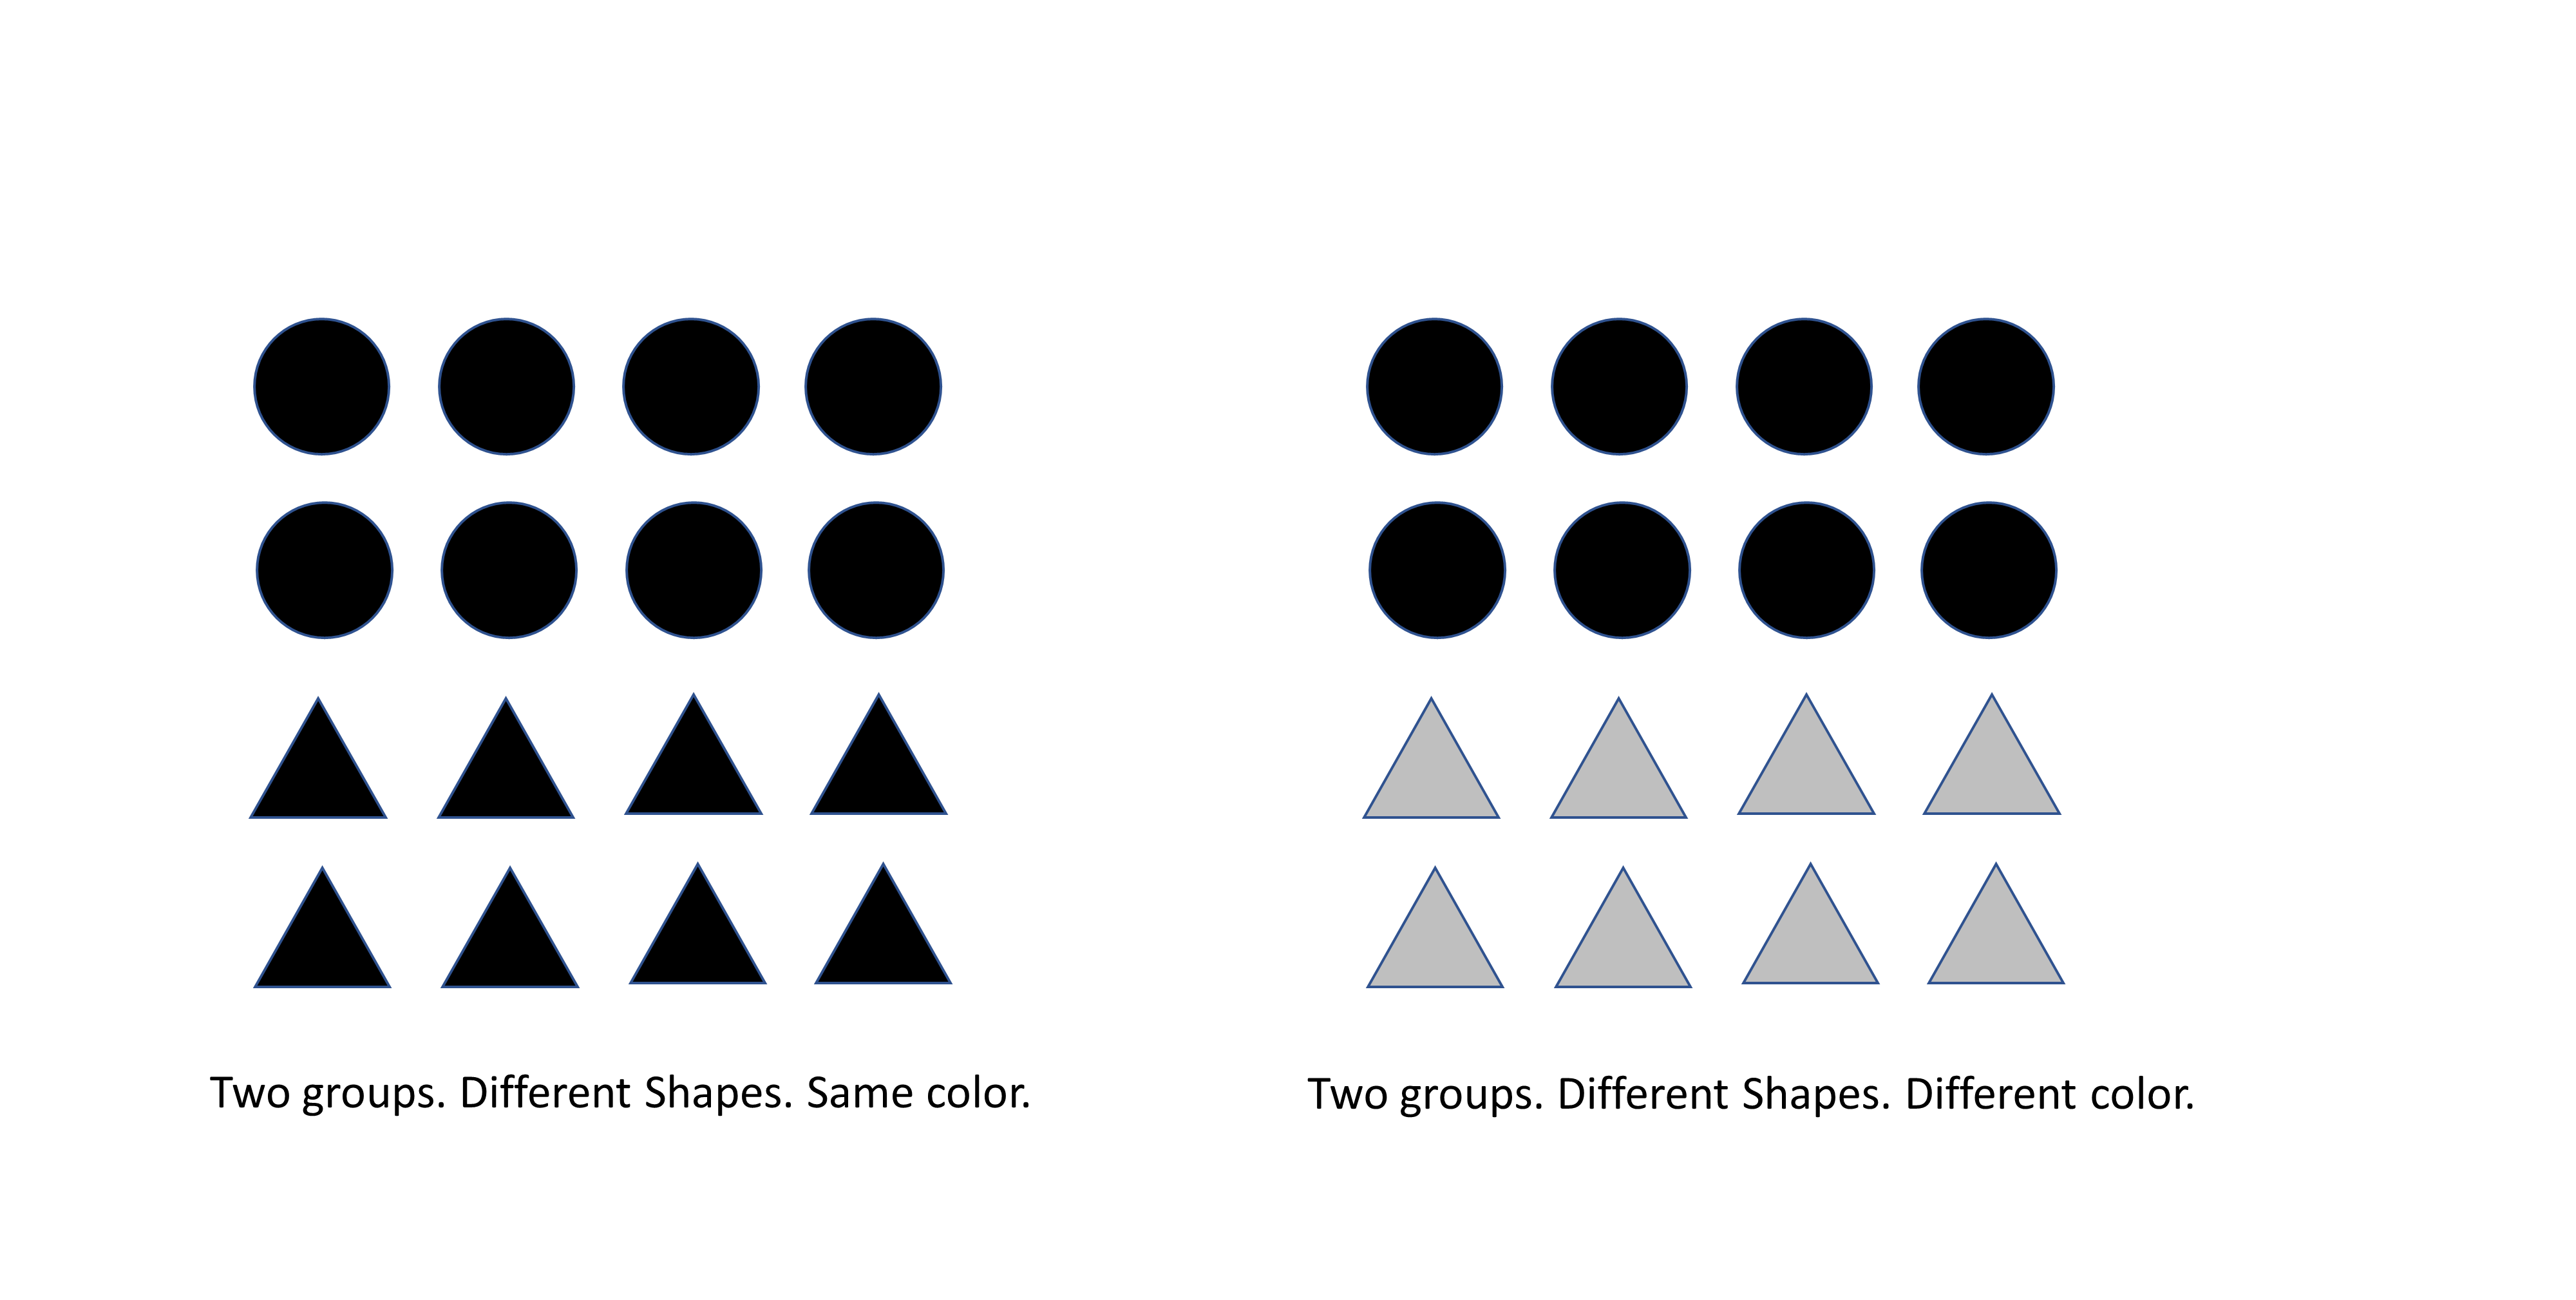 Gestalt Similarity Principle